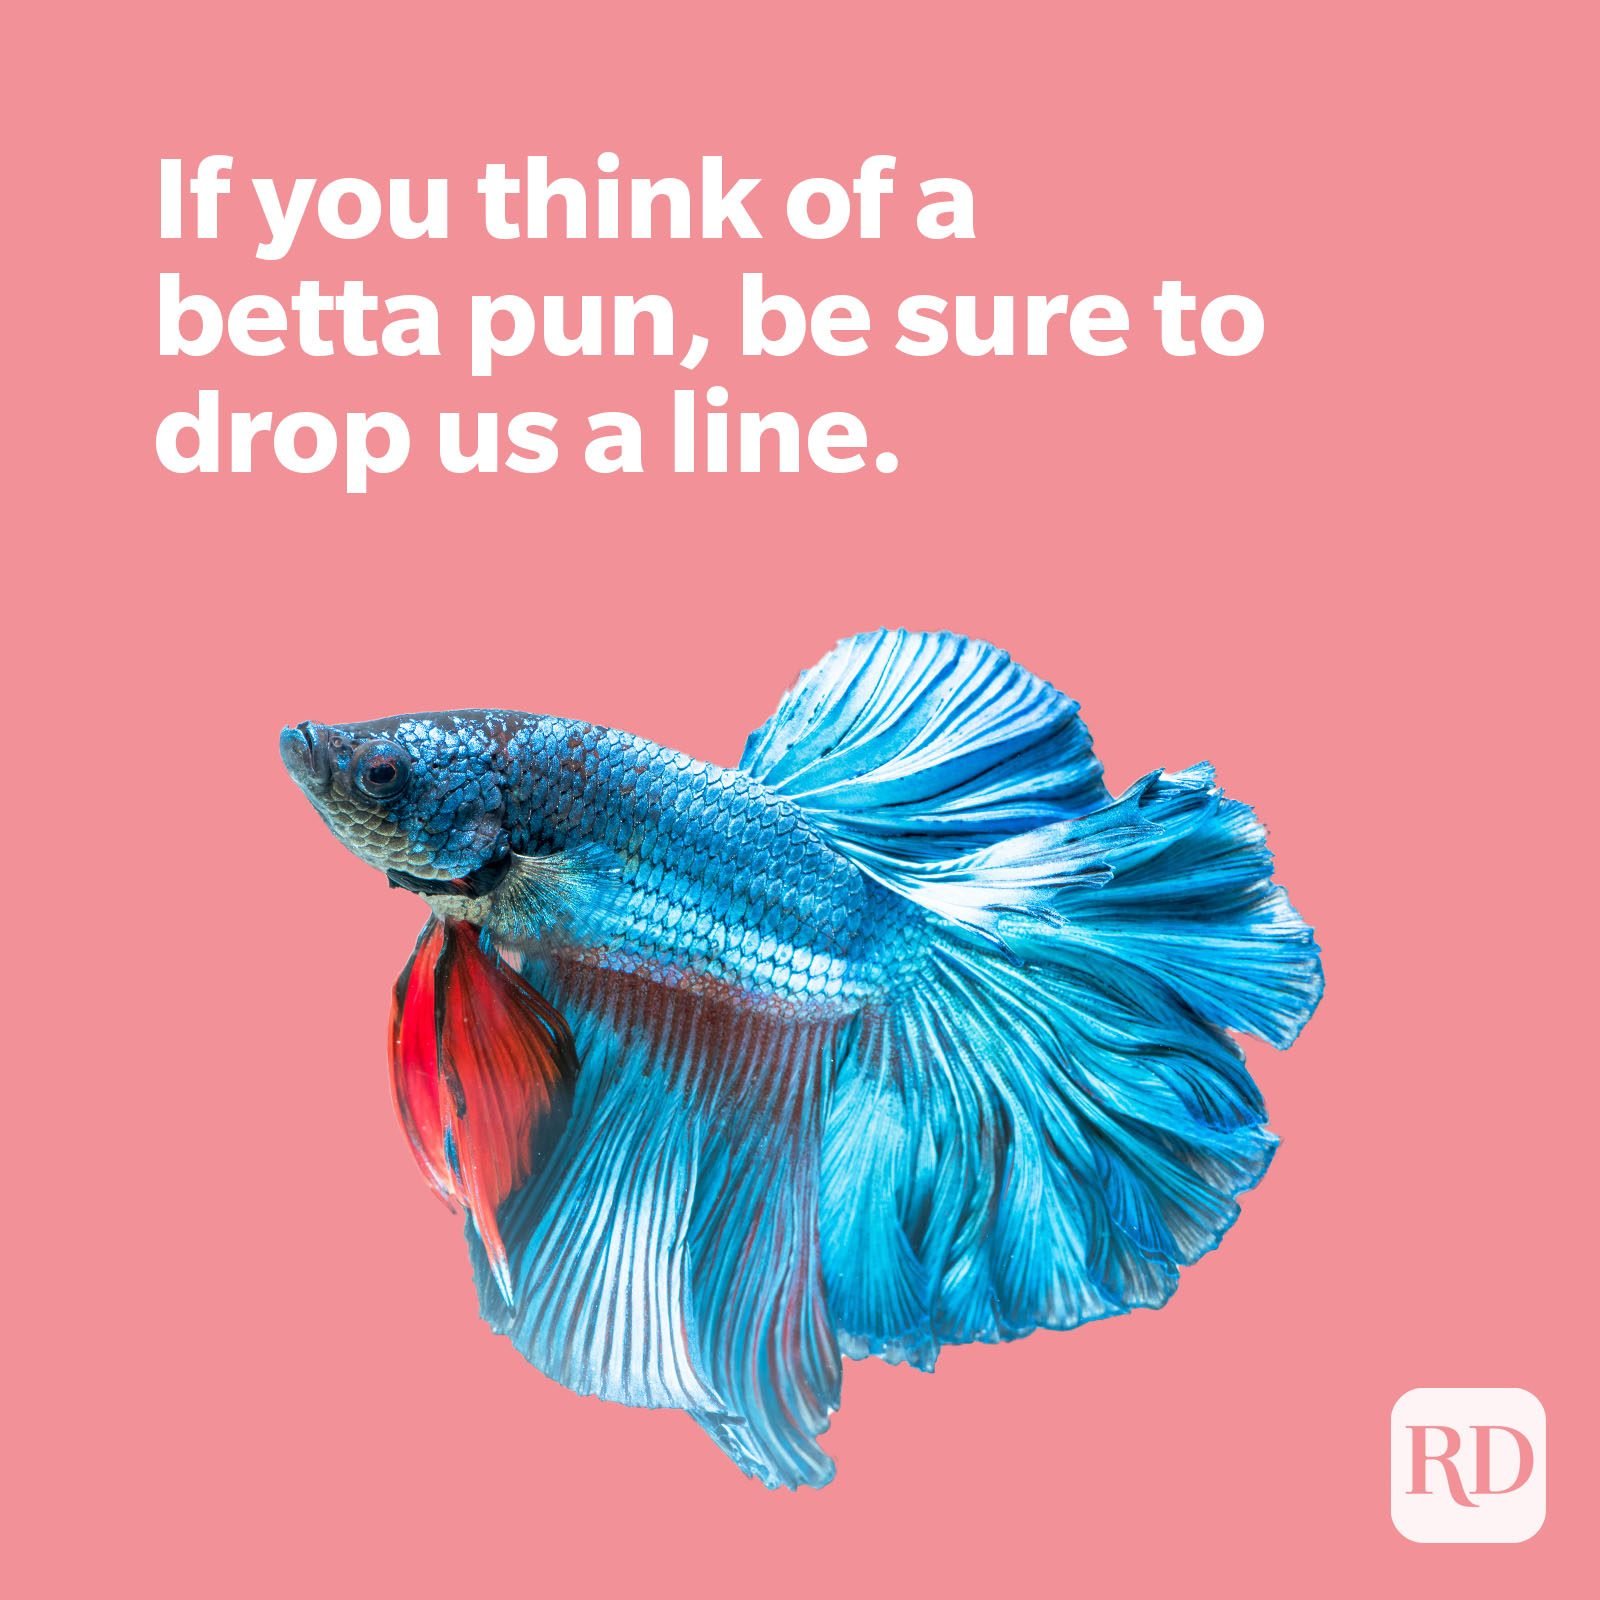 Blue betta fish with betta pun